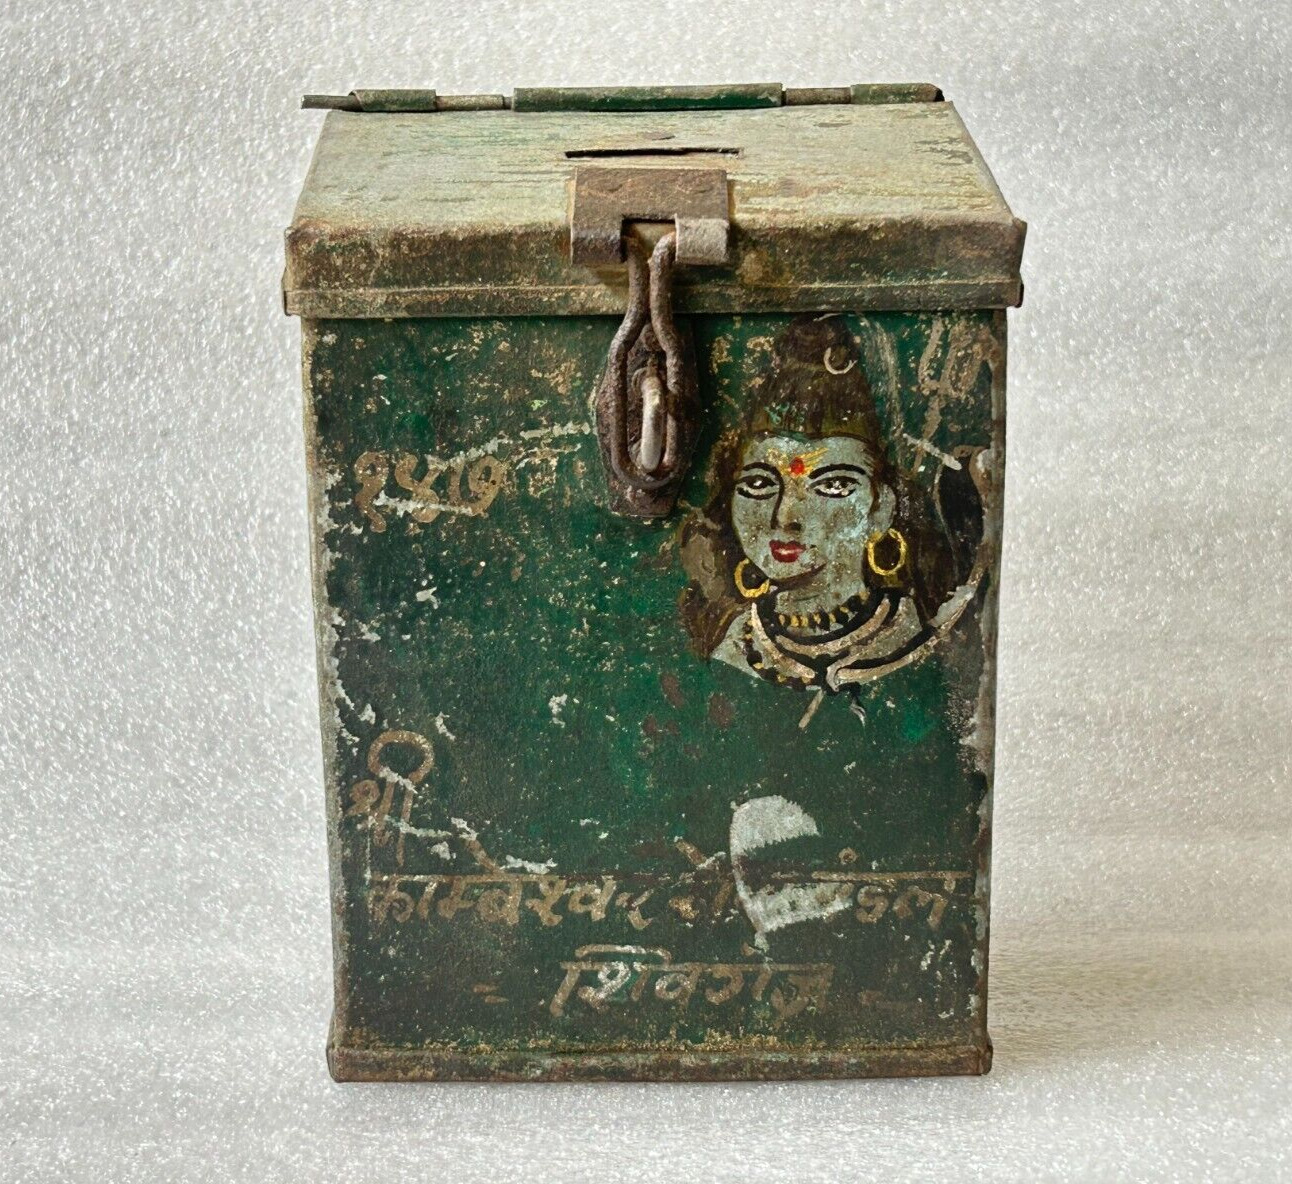 OLD VINTAGE HAND PAINTING GOD SIVYA INDIAN COIN/CASE BOX DAAN PETI IRON TIN BOX